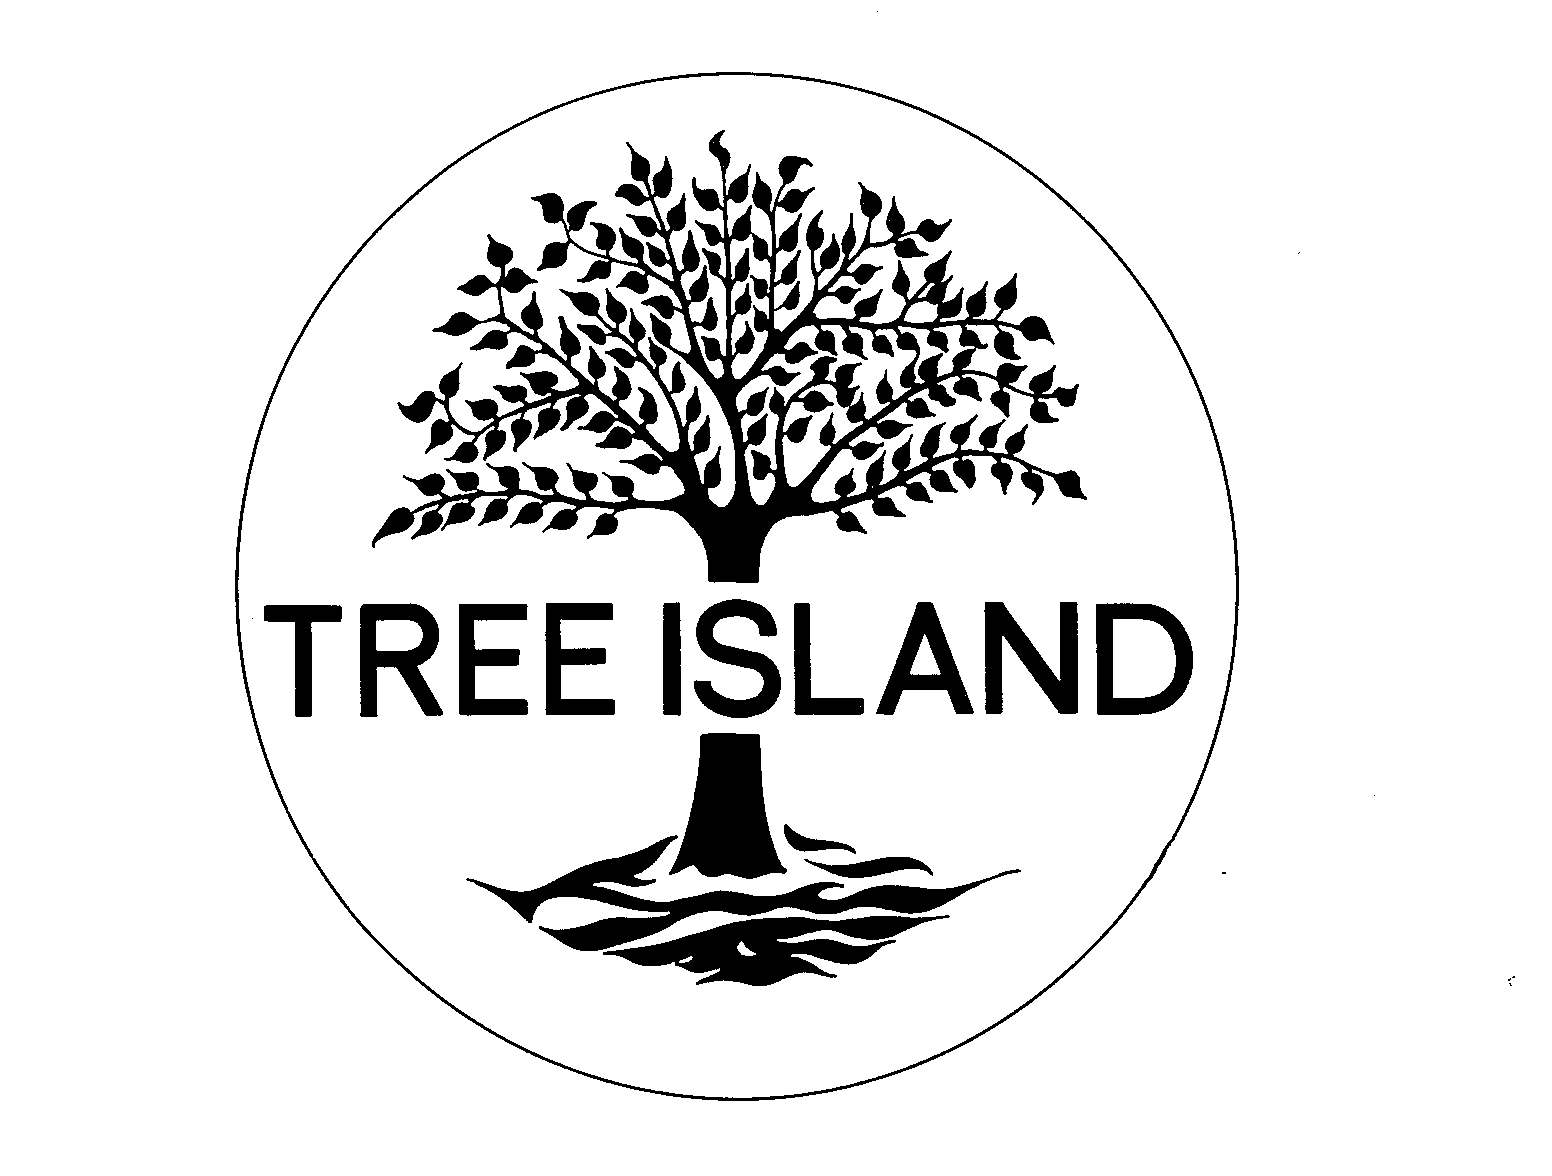 TREE ISLAND